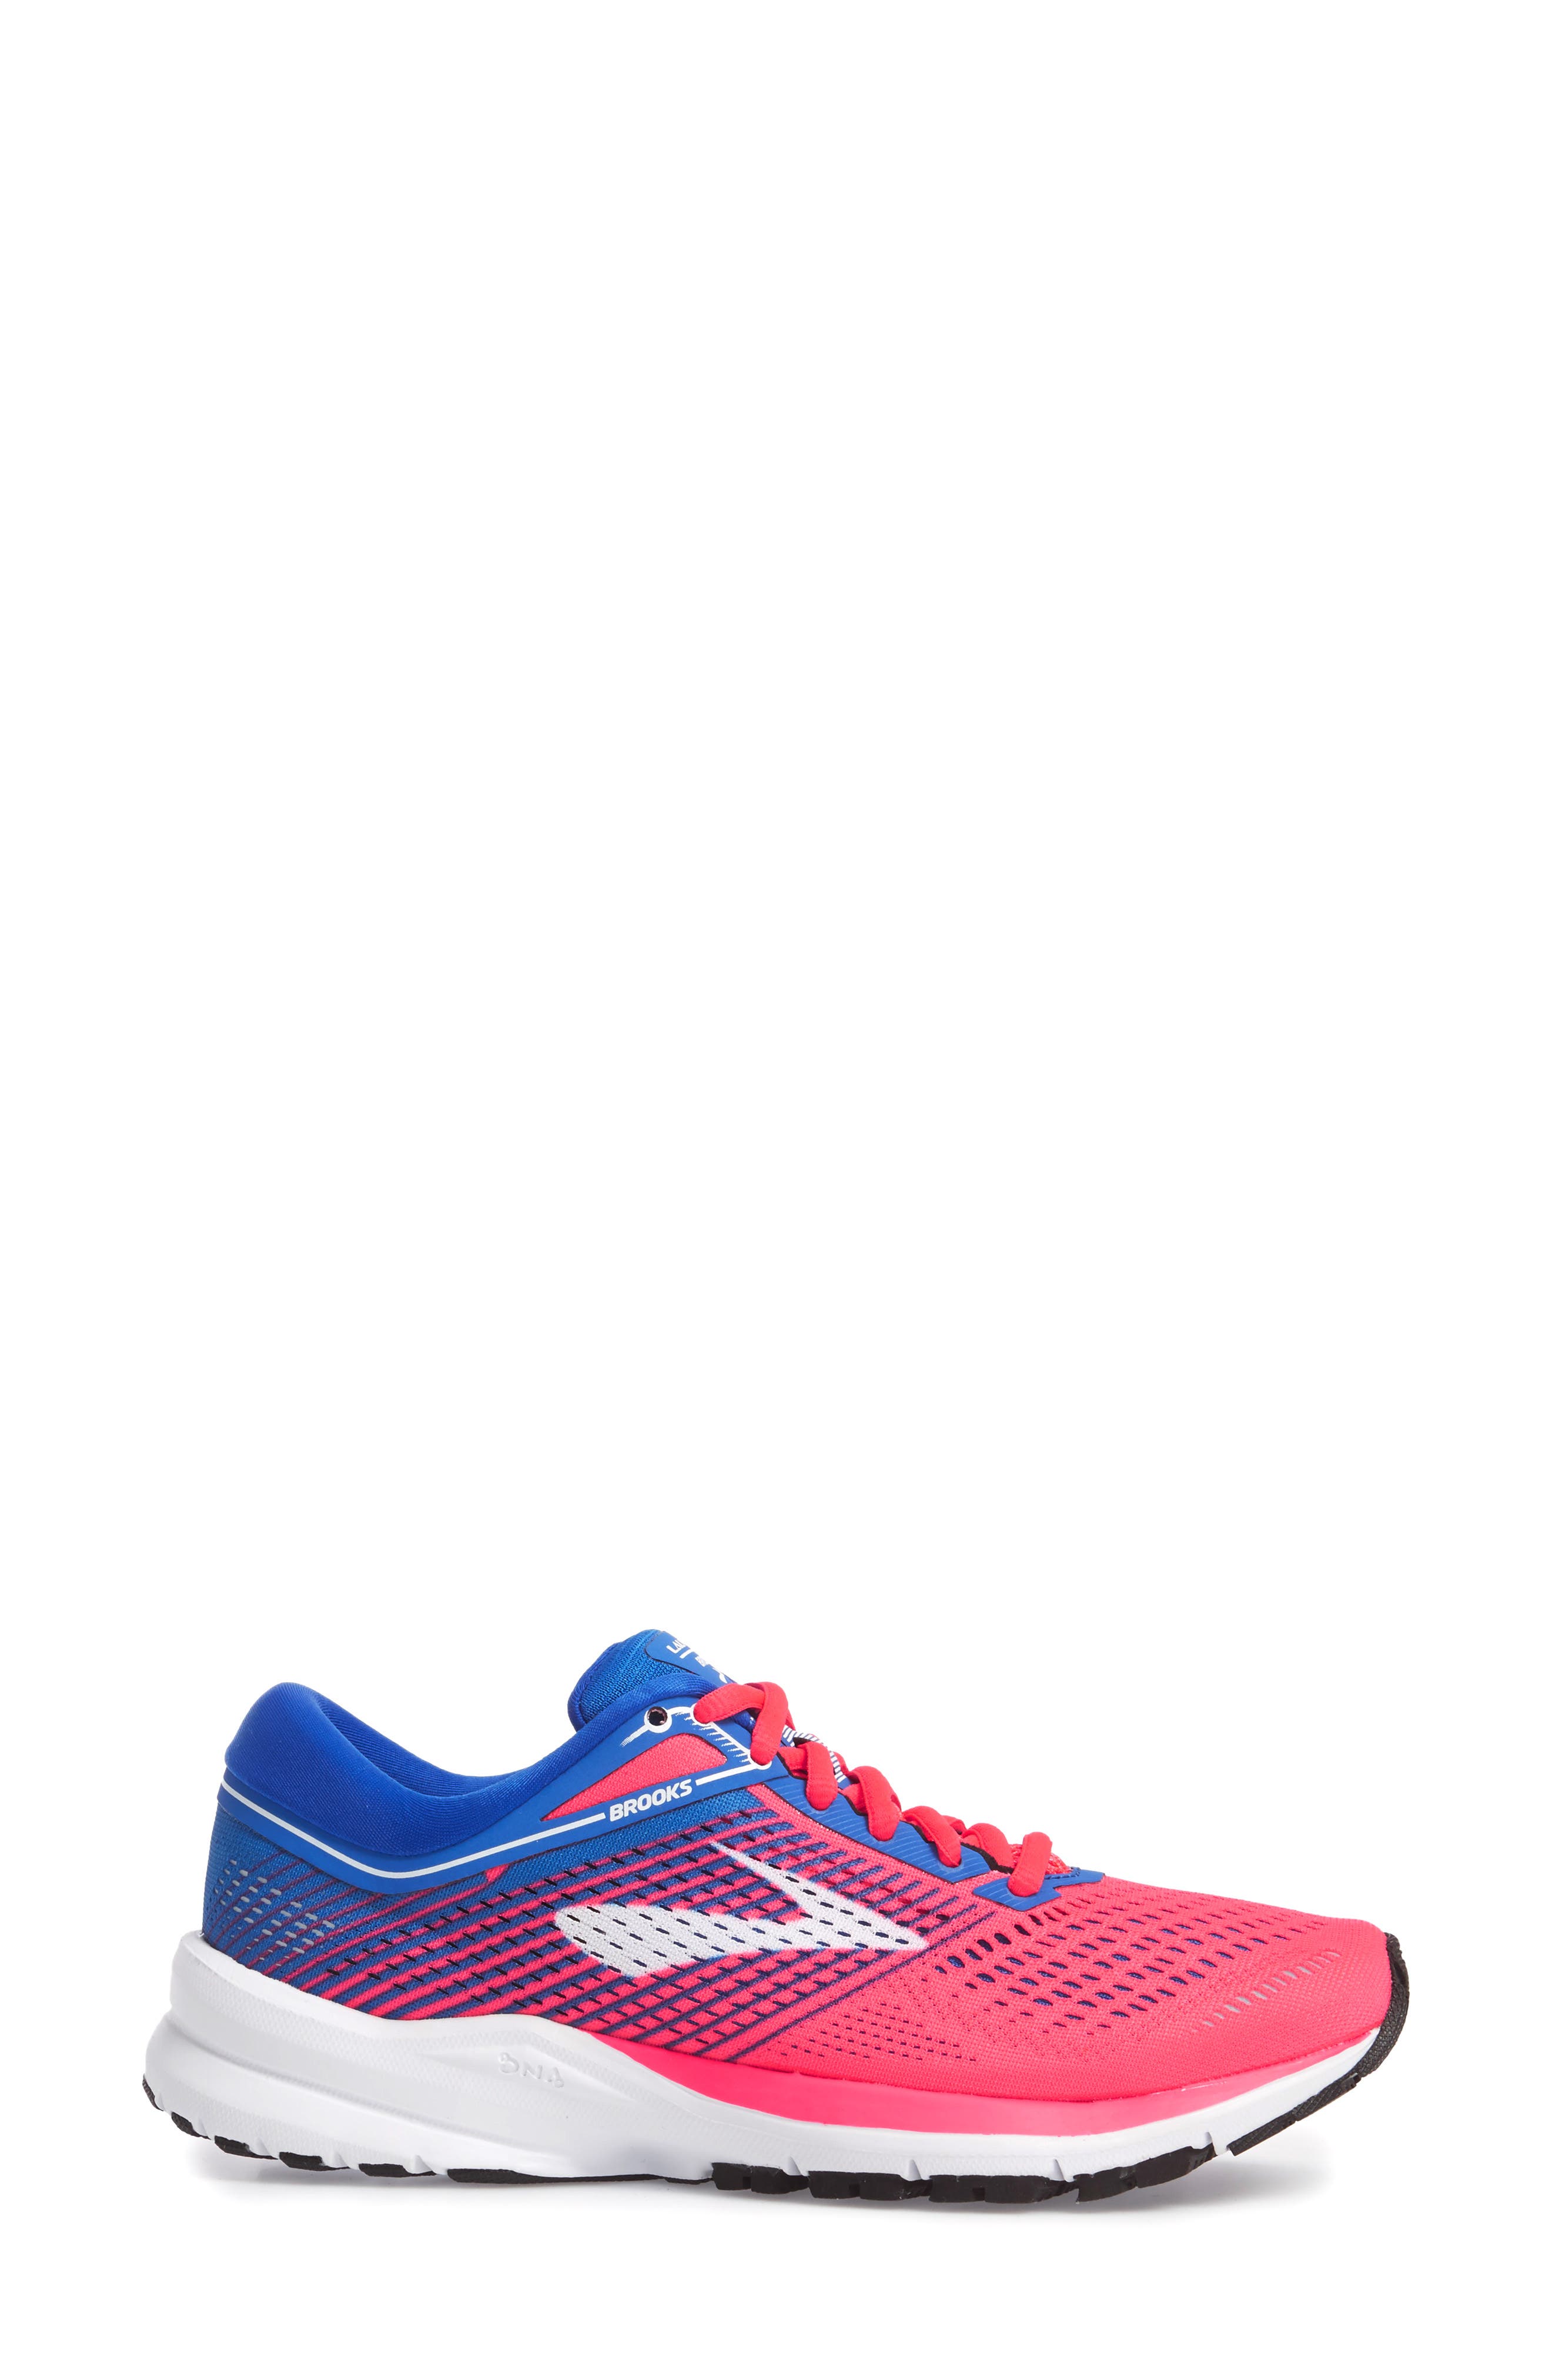 BROOKS Launch 5 Running Shoe in Pink/ Blue/ White | ModeSens